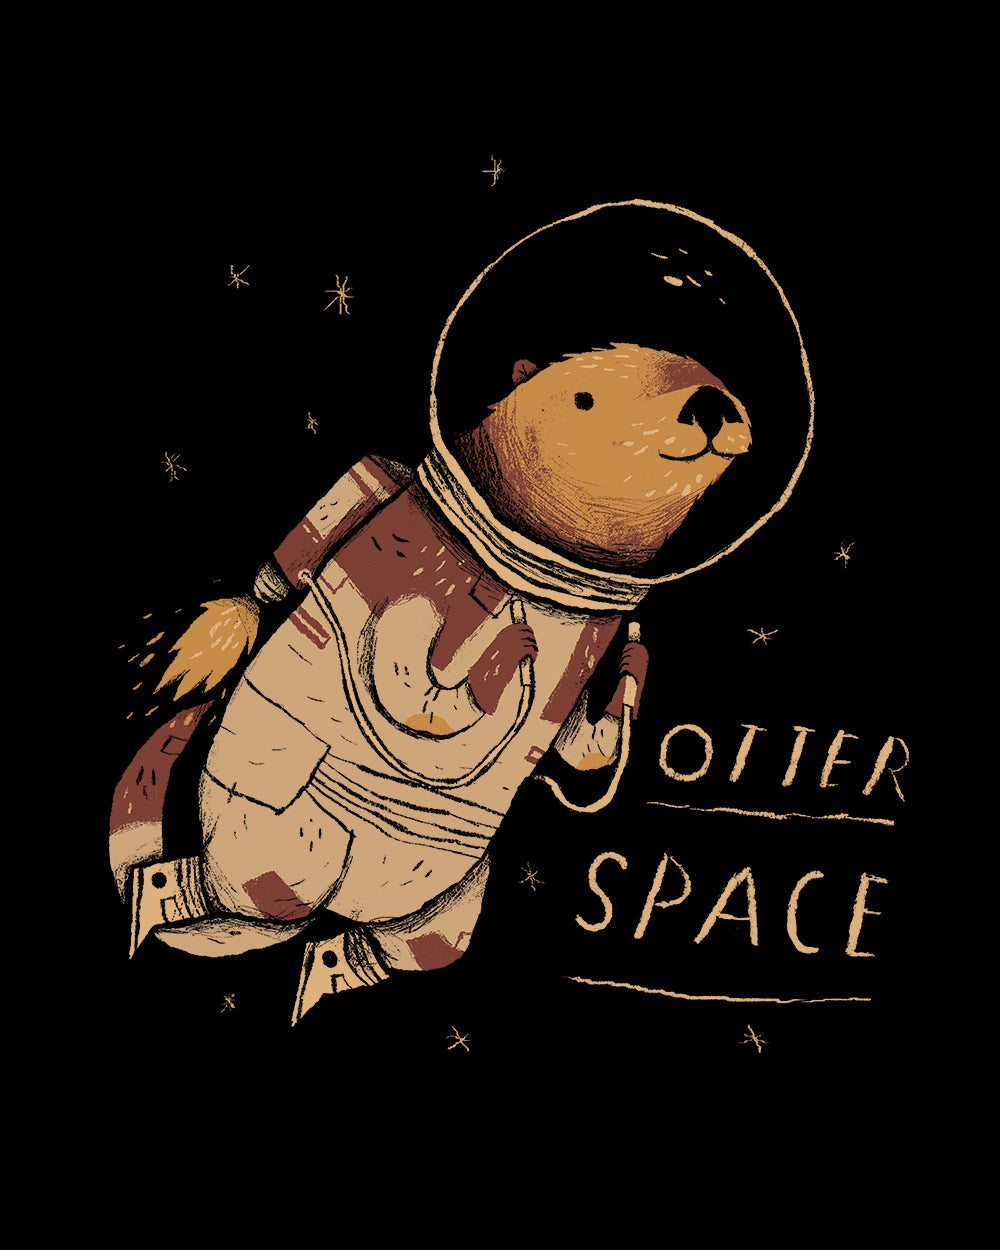 Otter Space Kids T-Shirt Australia Online #colour_black